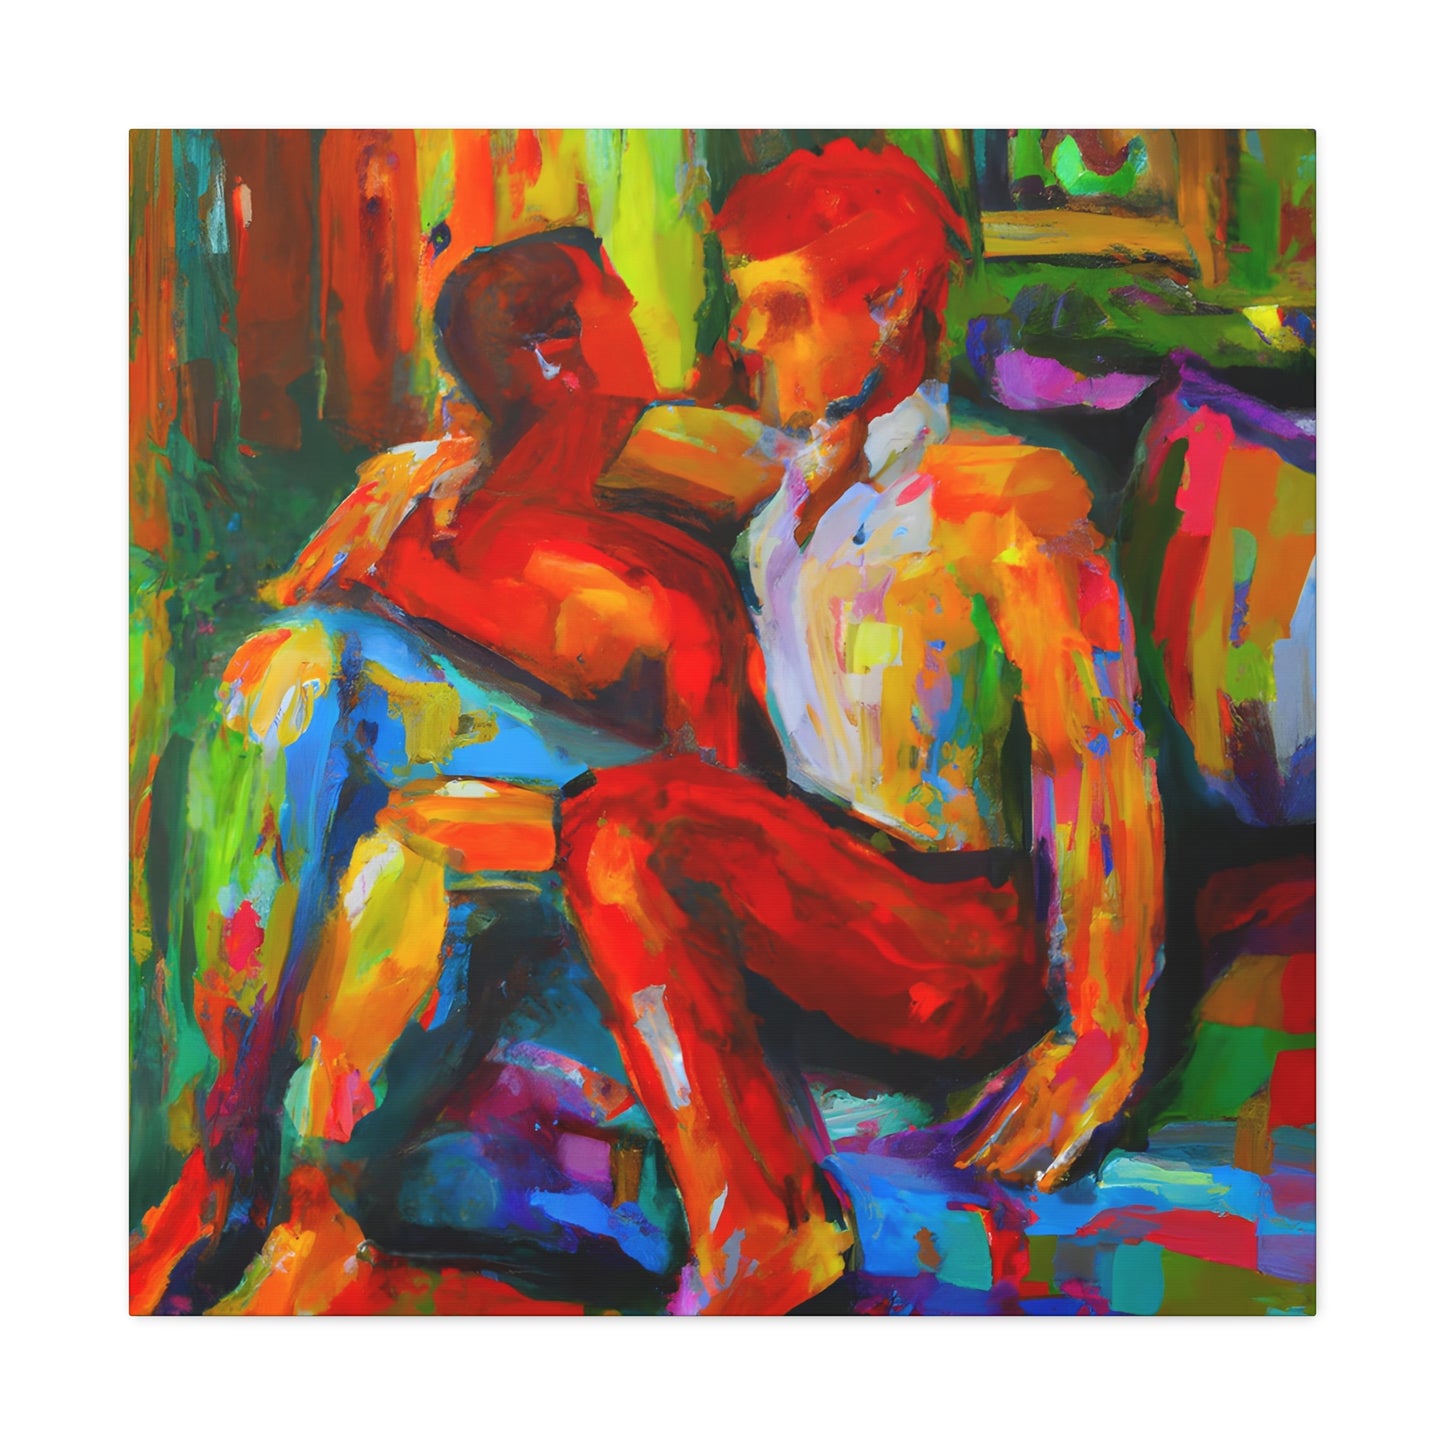 Dorian - Gay Love Canvas Art